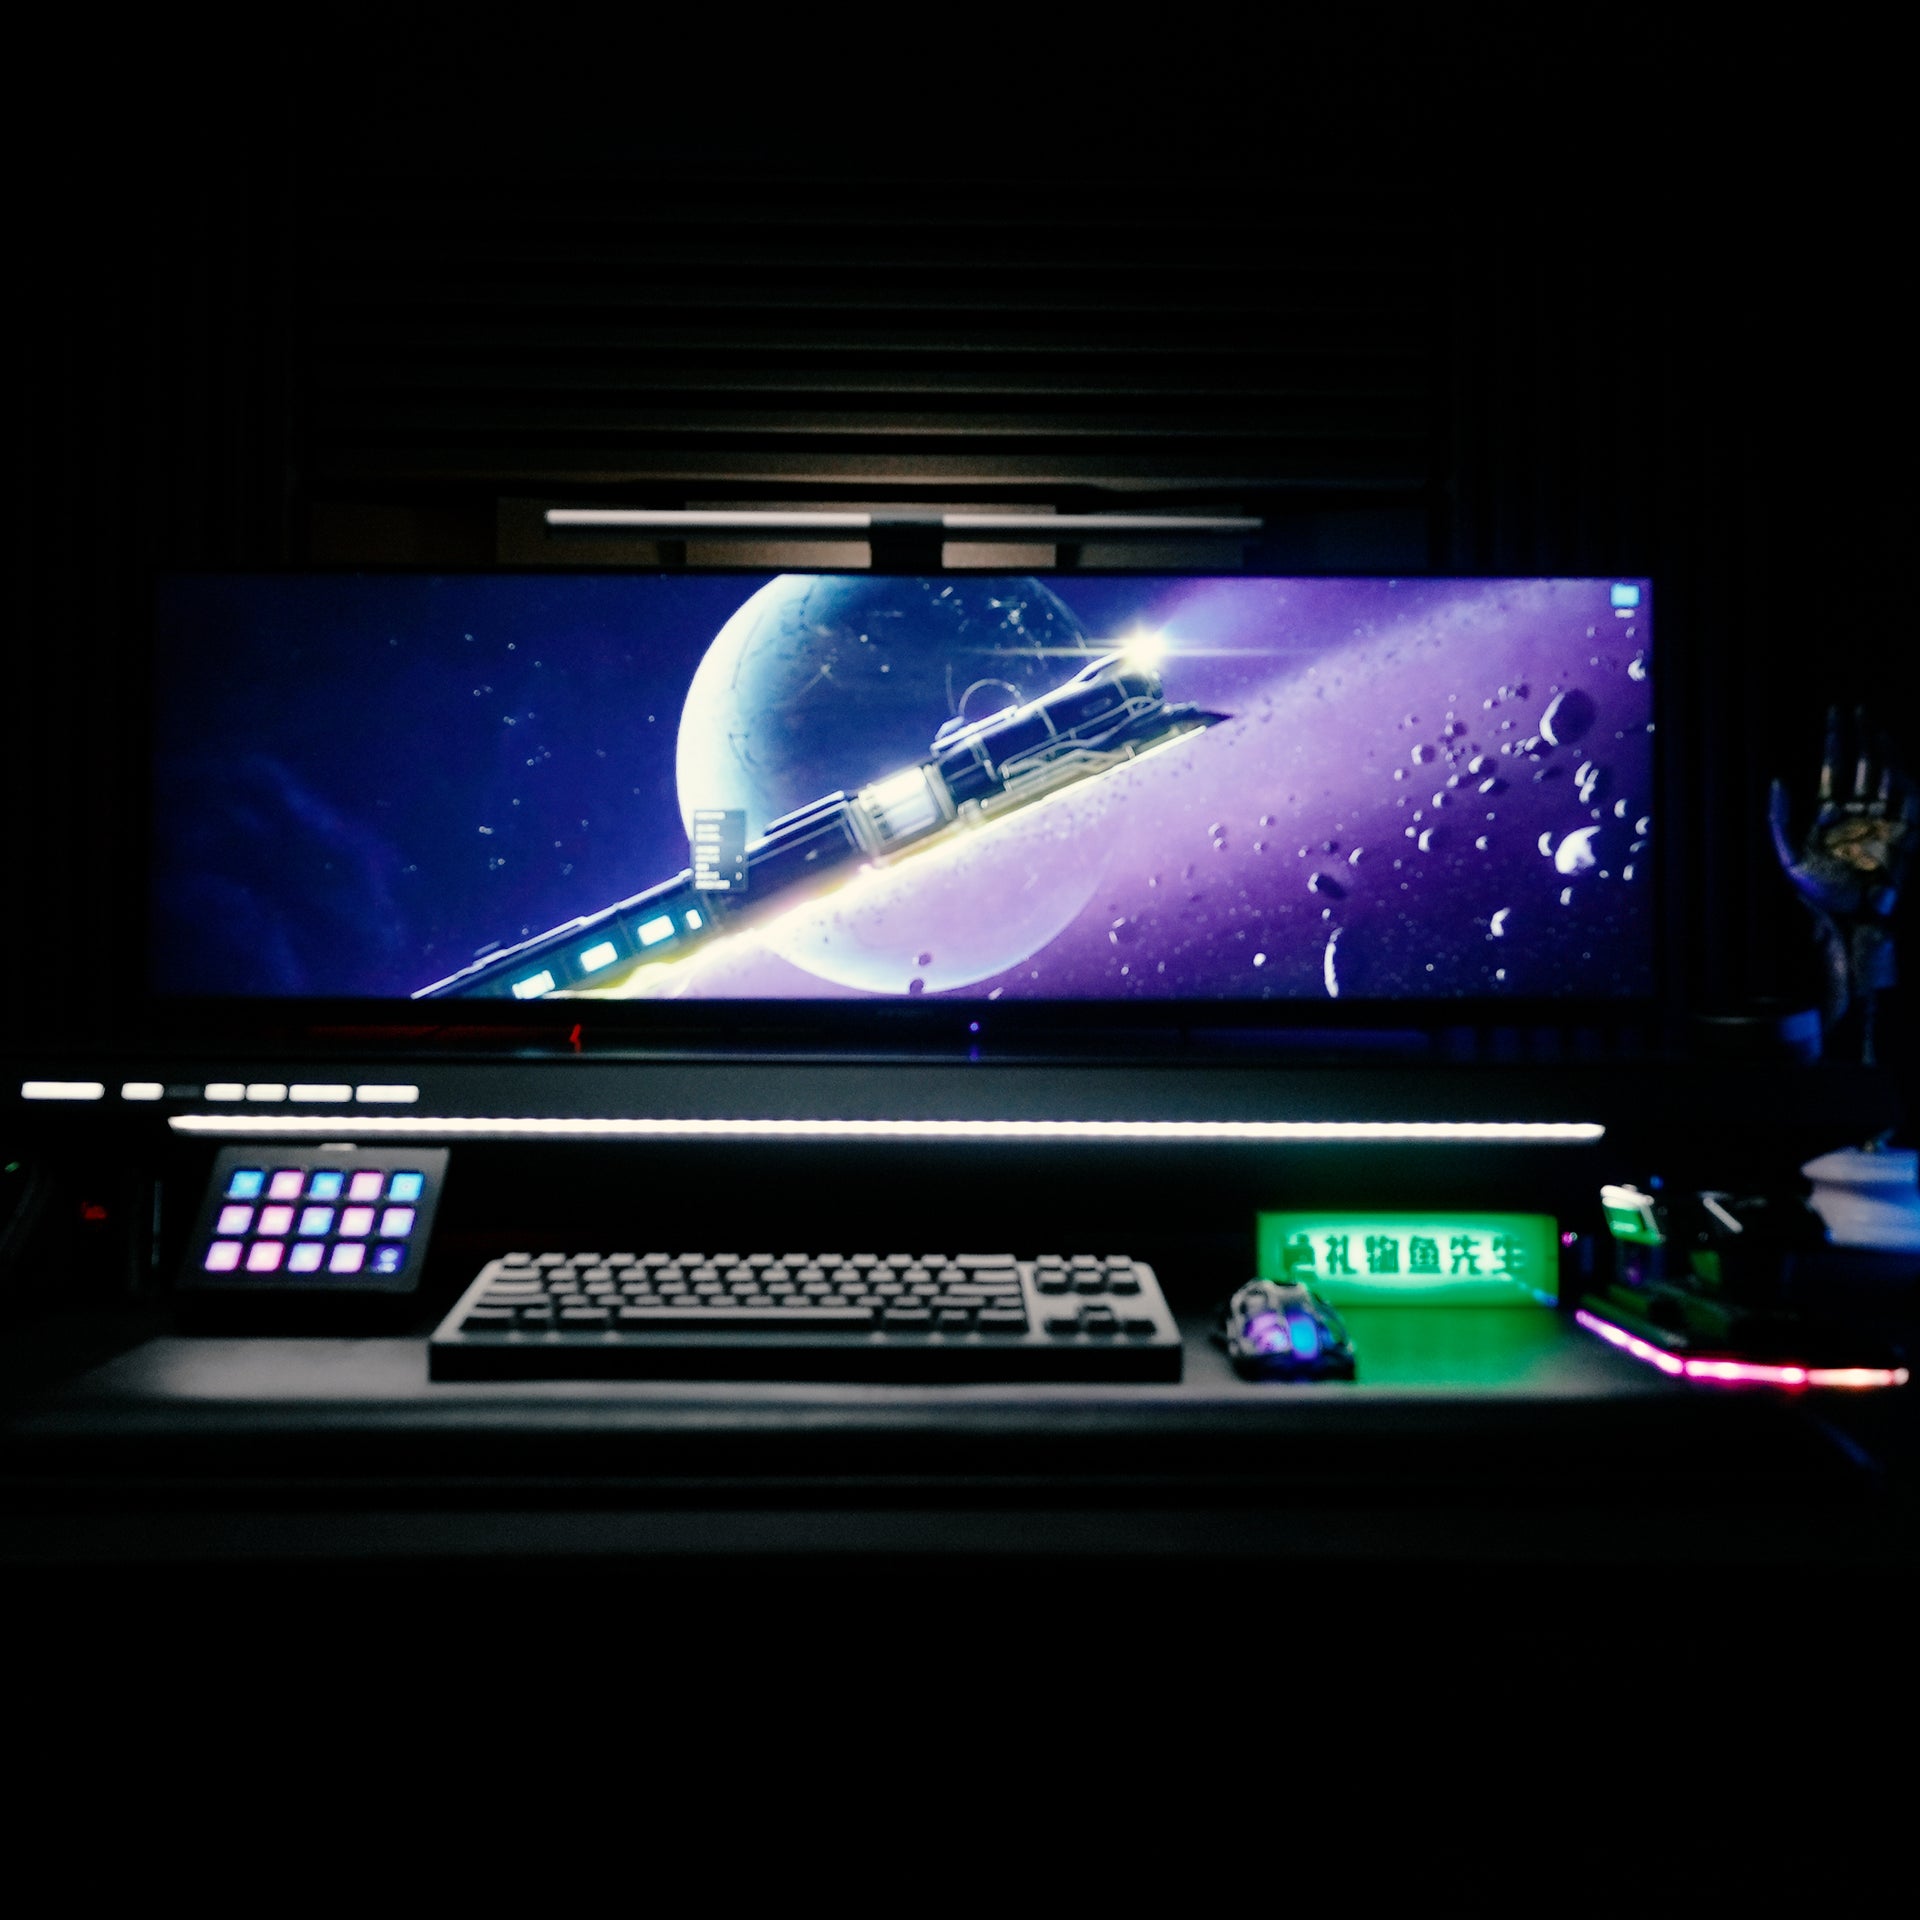 Hexcal desk setup 101